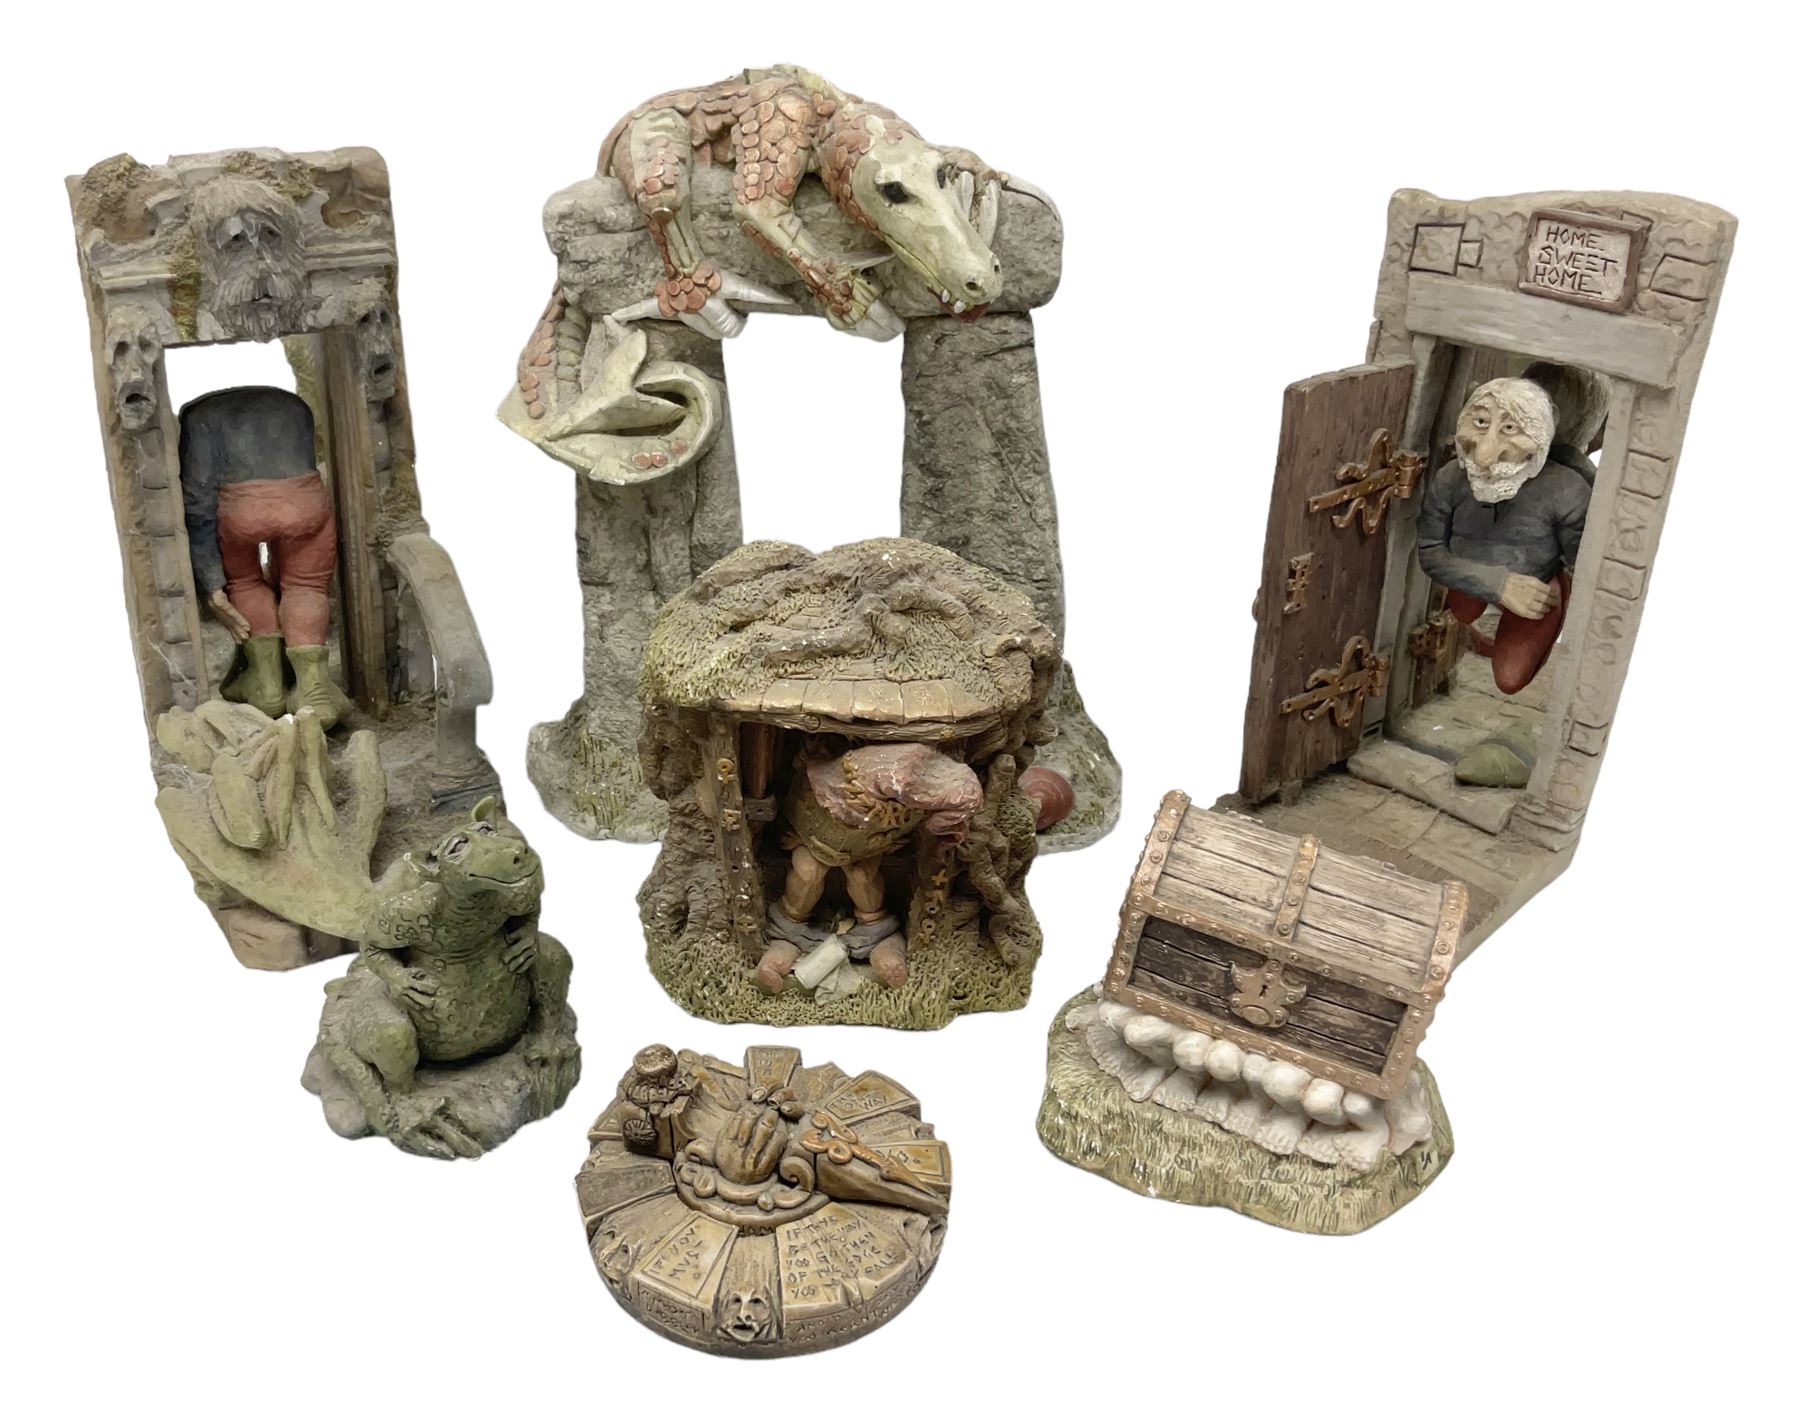 Seven Terry Pratchett Discworld figures by Clarecraft